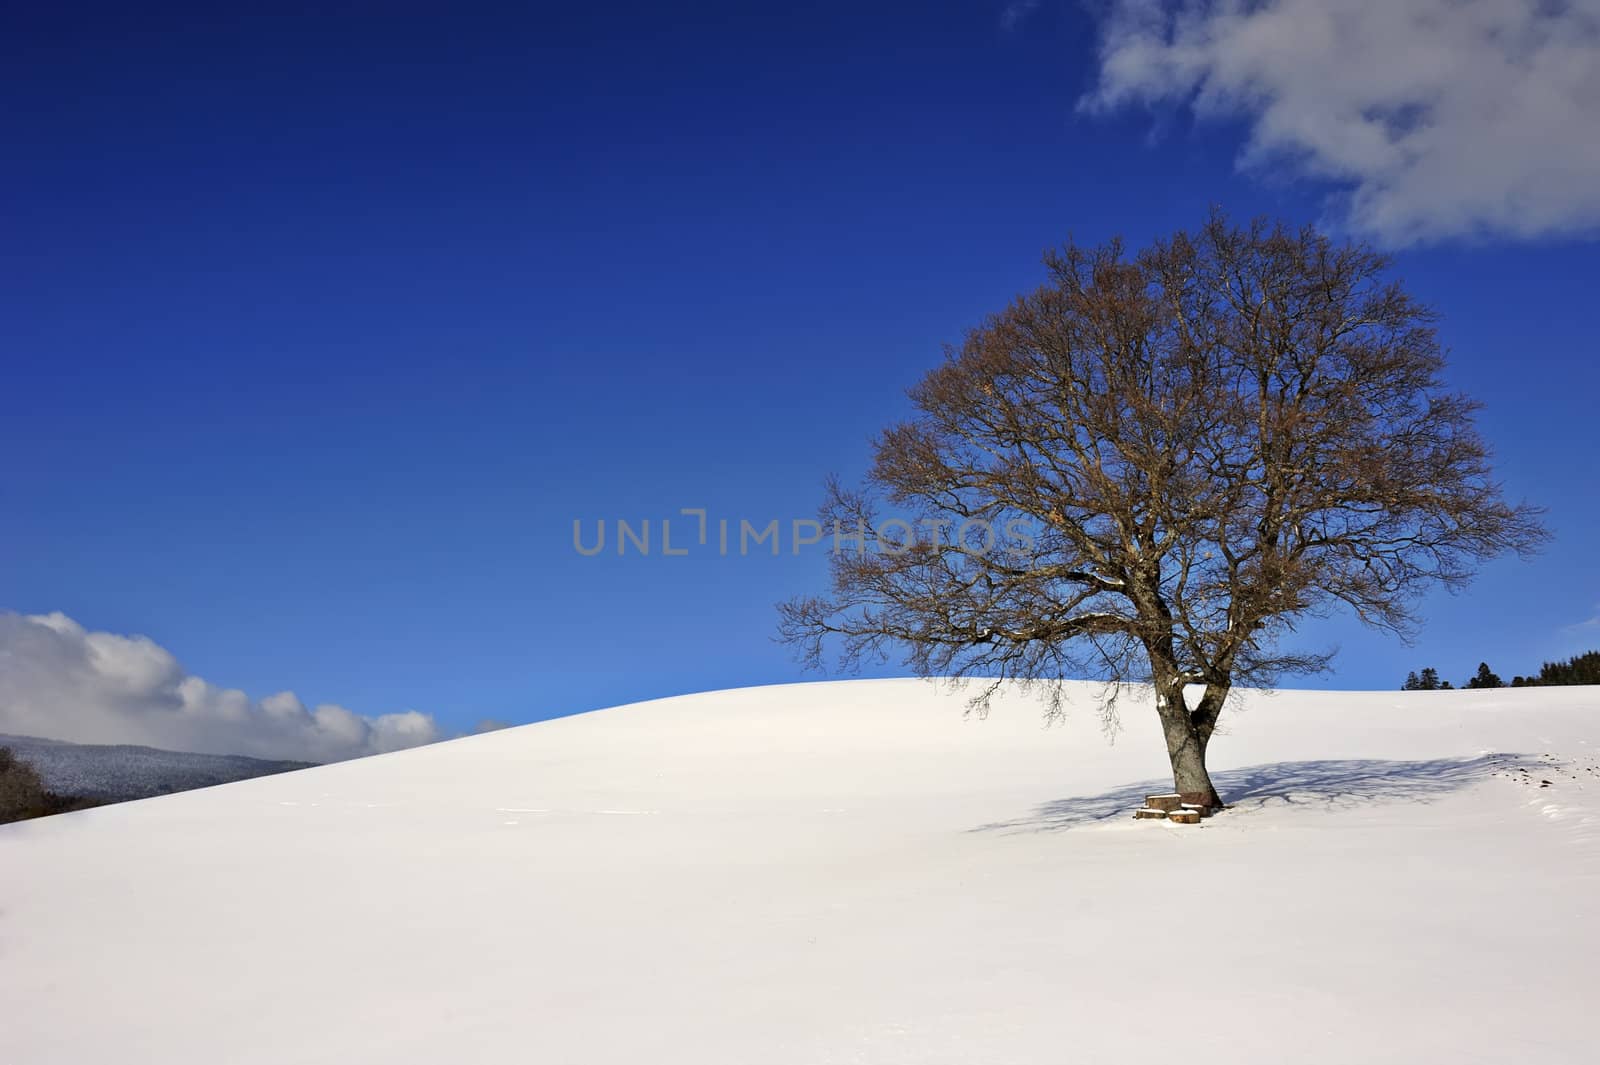 A leafless tree standing in a snowy field